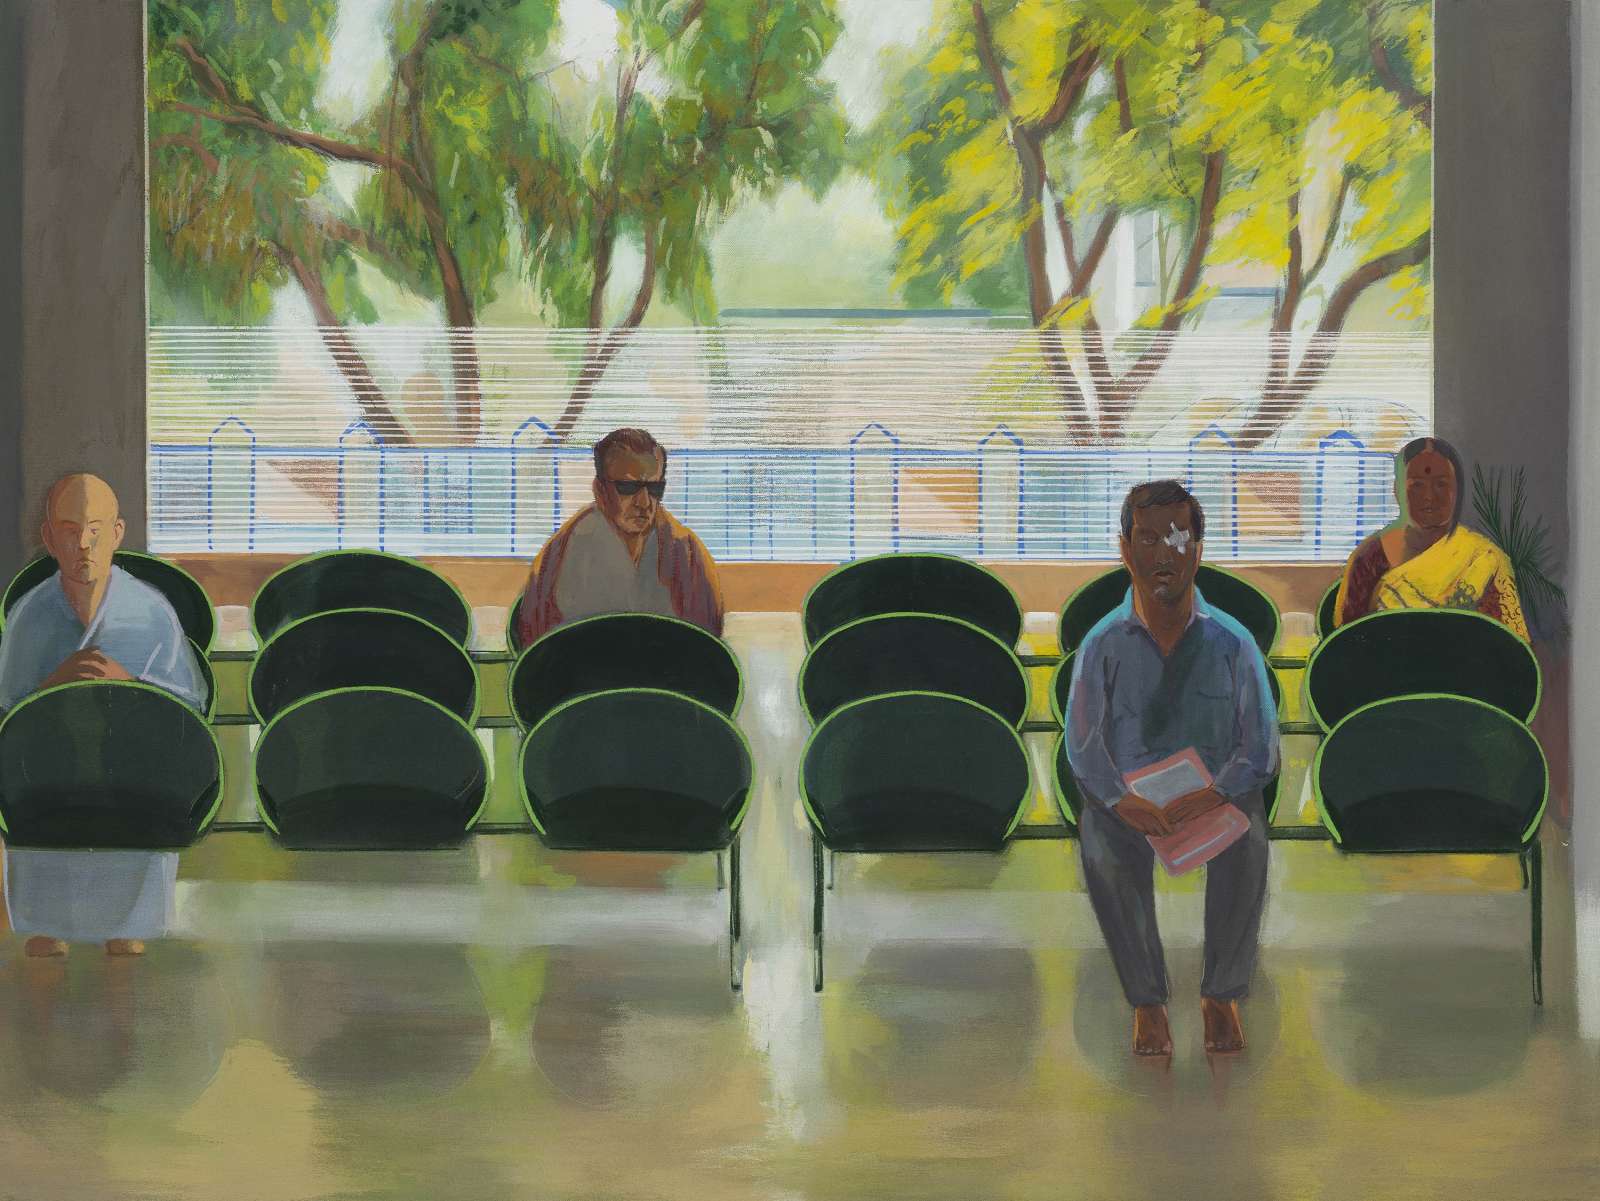 Mahesh Baliga, Eye hospital, 2022. Casein on canvas © Mahesh Baliga. Courtesy the artist, Project 88, and David Zwirner